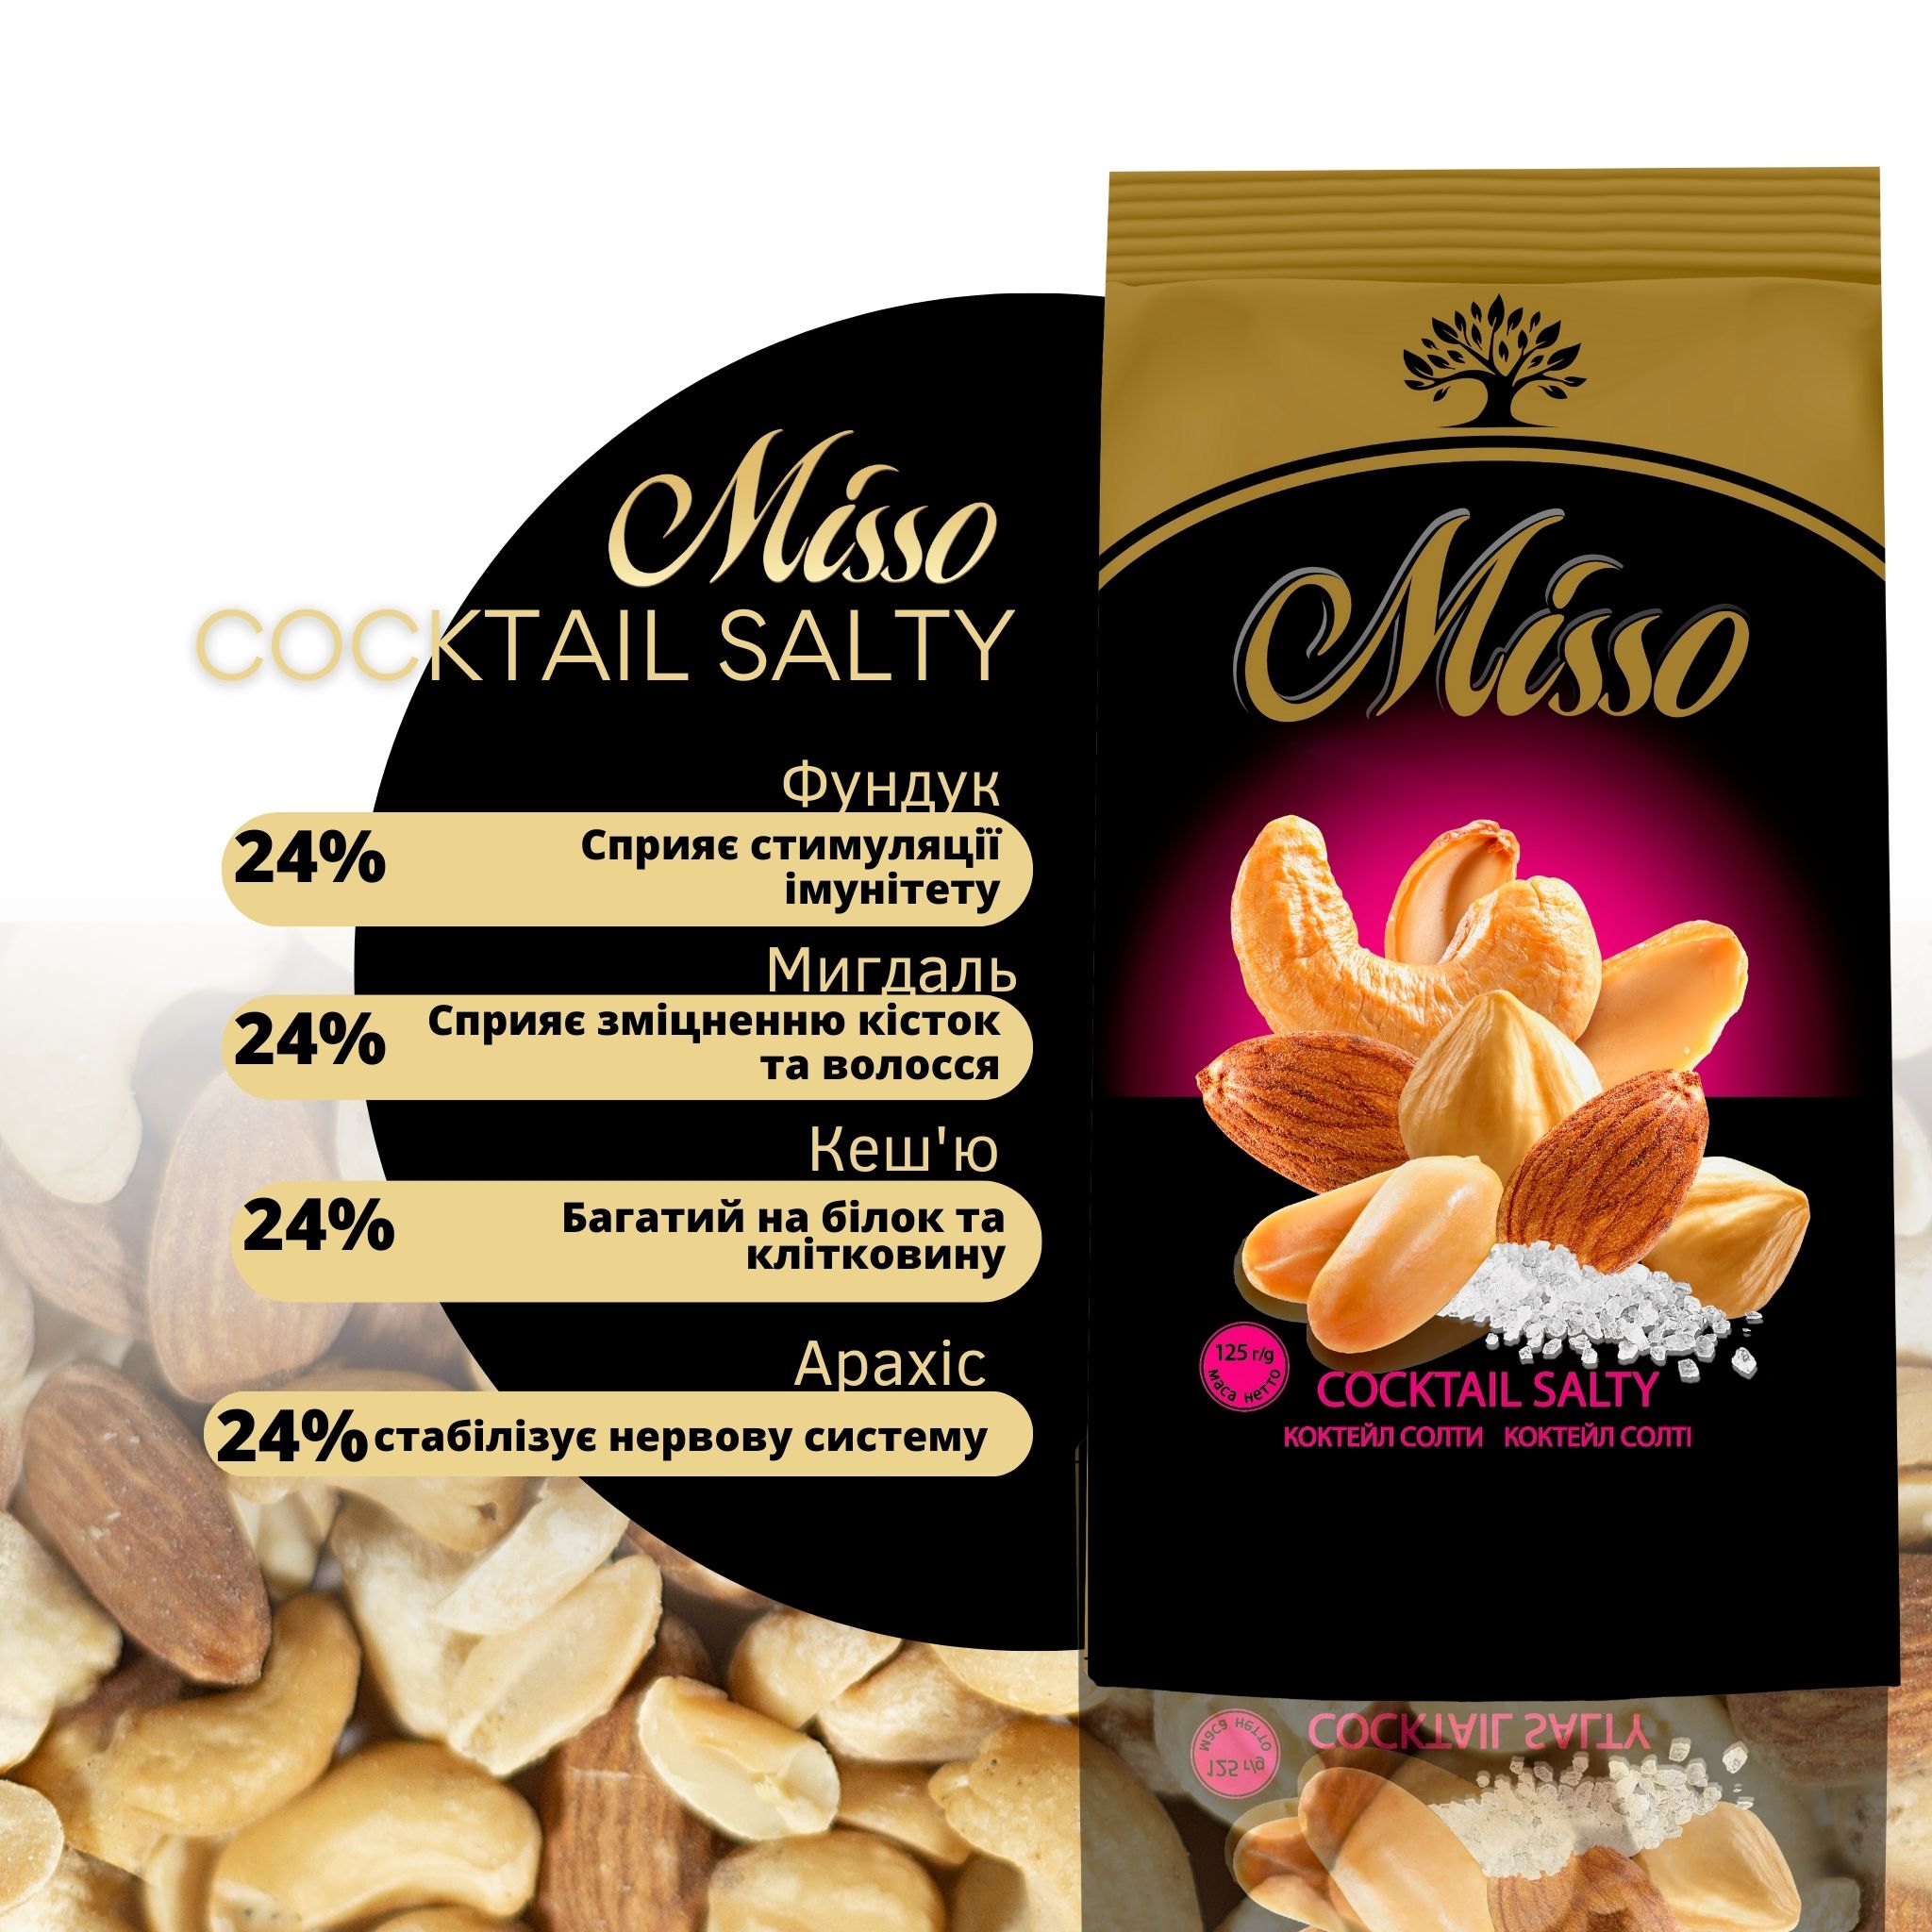 Ассорти орехов Misso Coctail Salty 125 г - фото 3